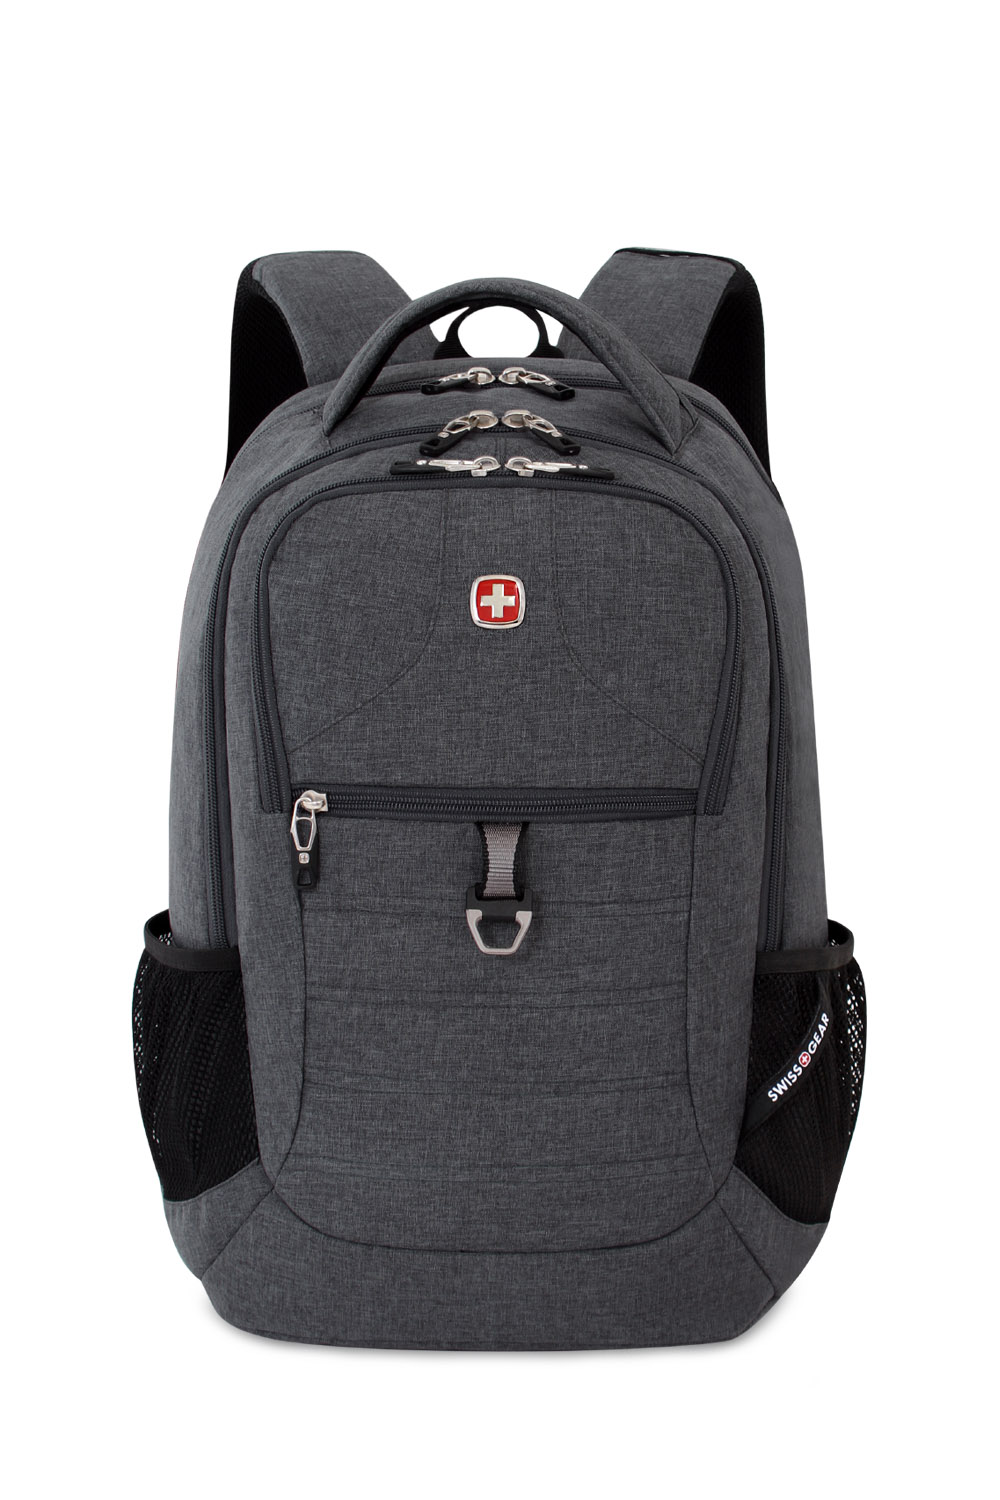 Review: Swiss Gear Sling Bag as a Camera Bag